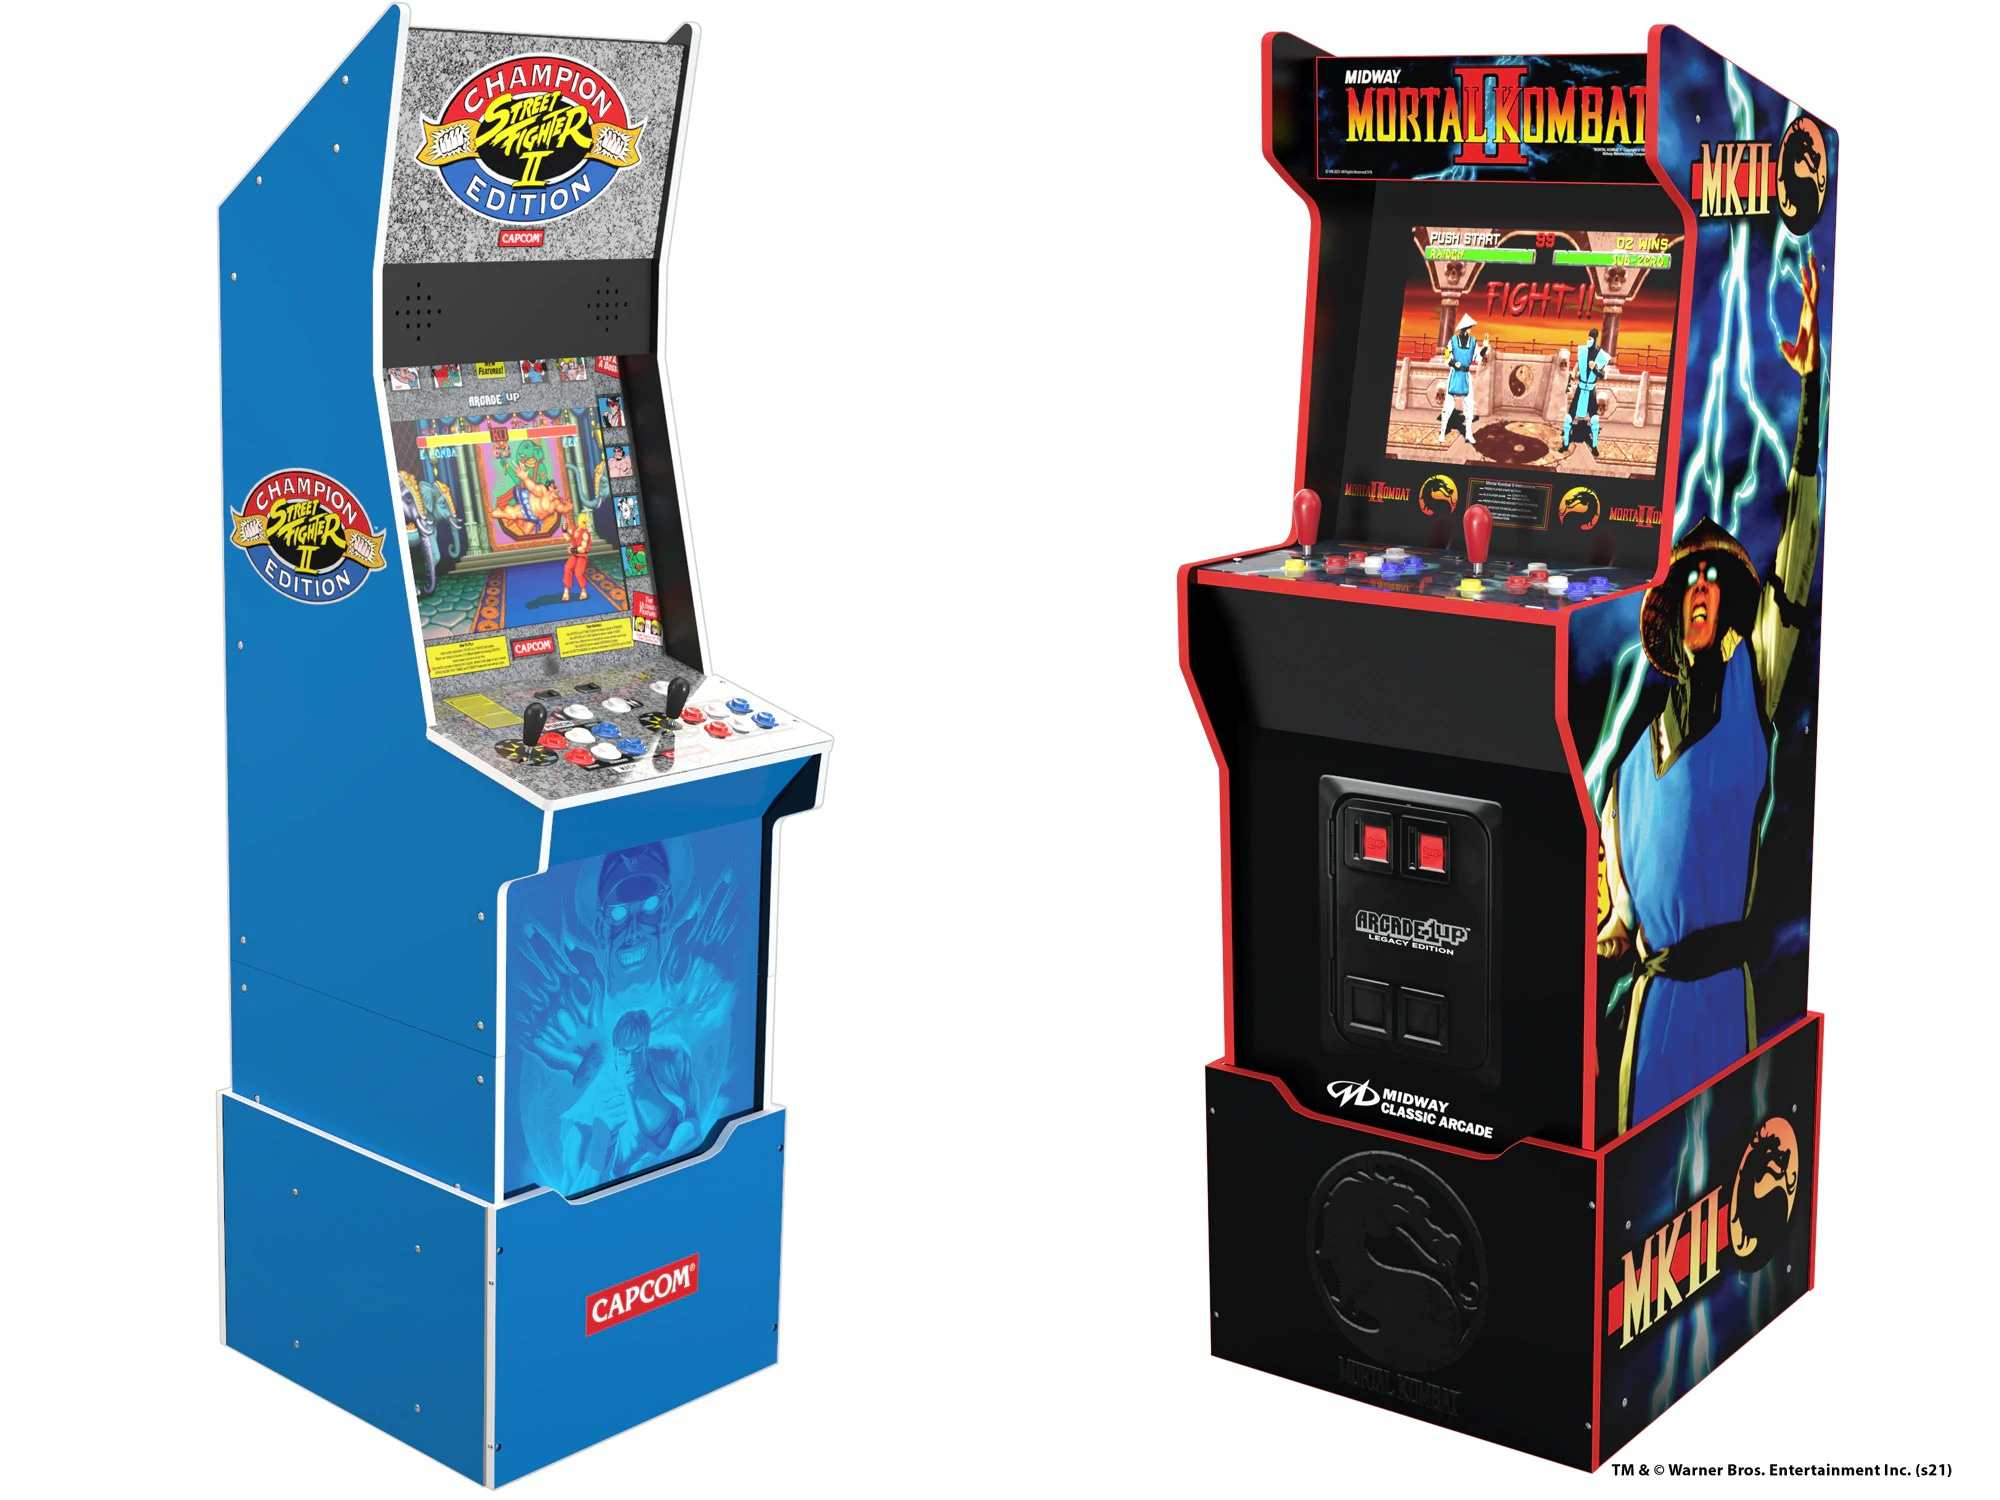 How Mortal Kombat Made the Jump to Super NES and Sega Genesis, by David  Craddock